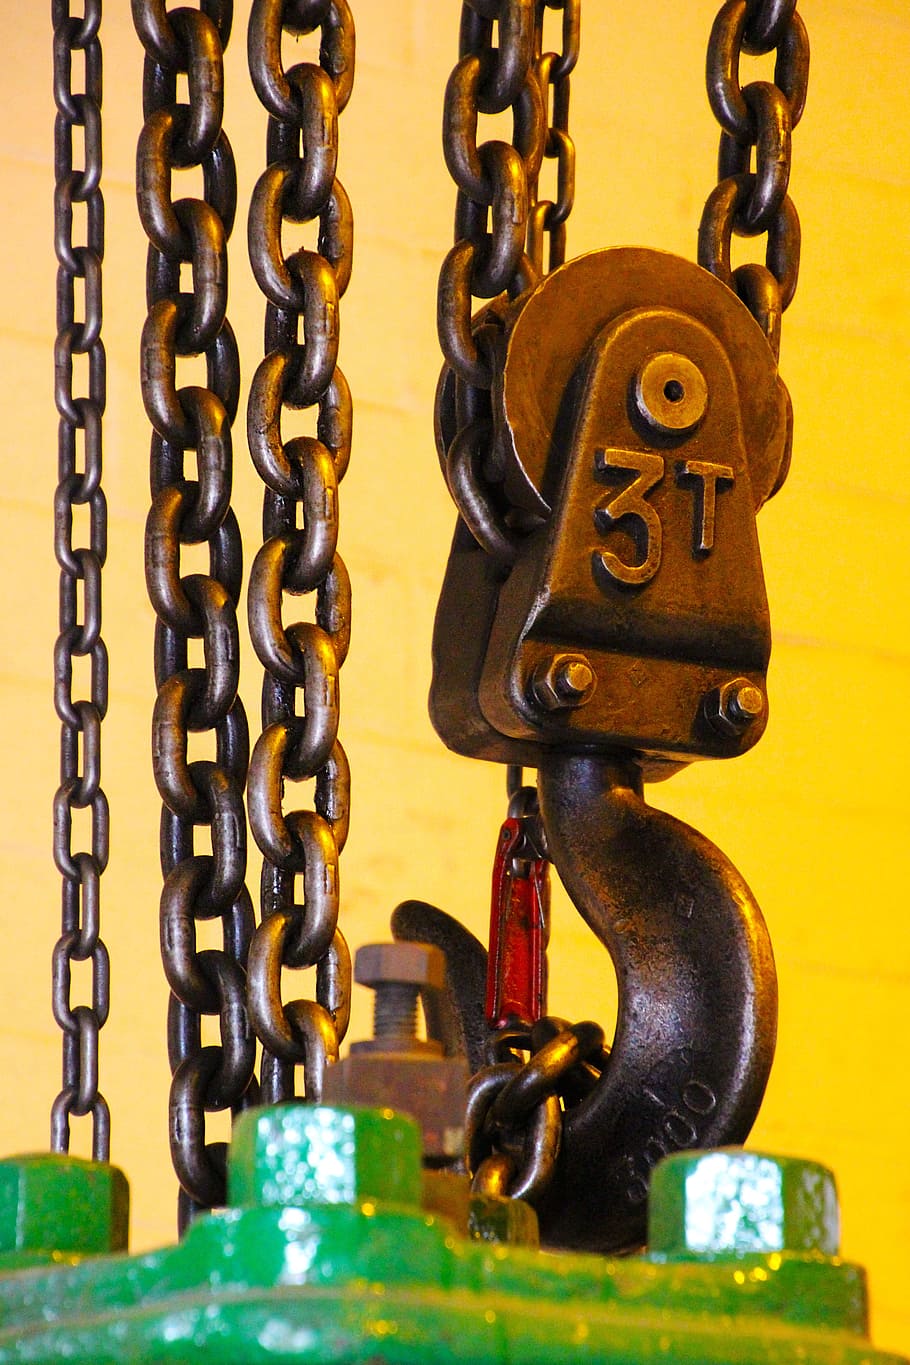 3t, black, pulley, chain, winch, equipment, hoist, mechanism, metallic, pull